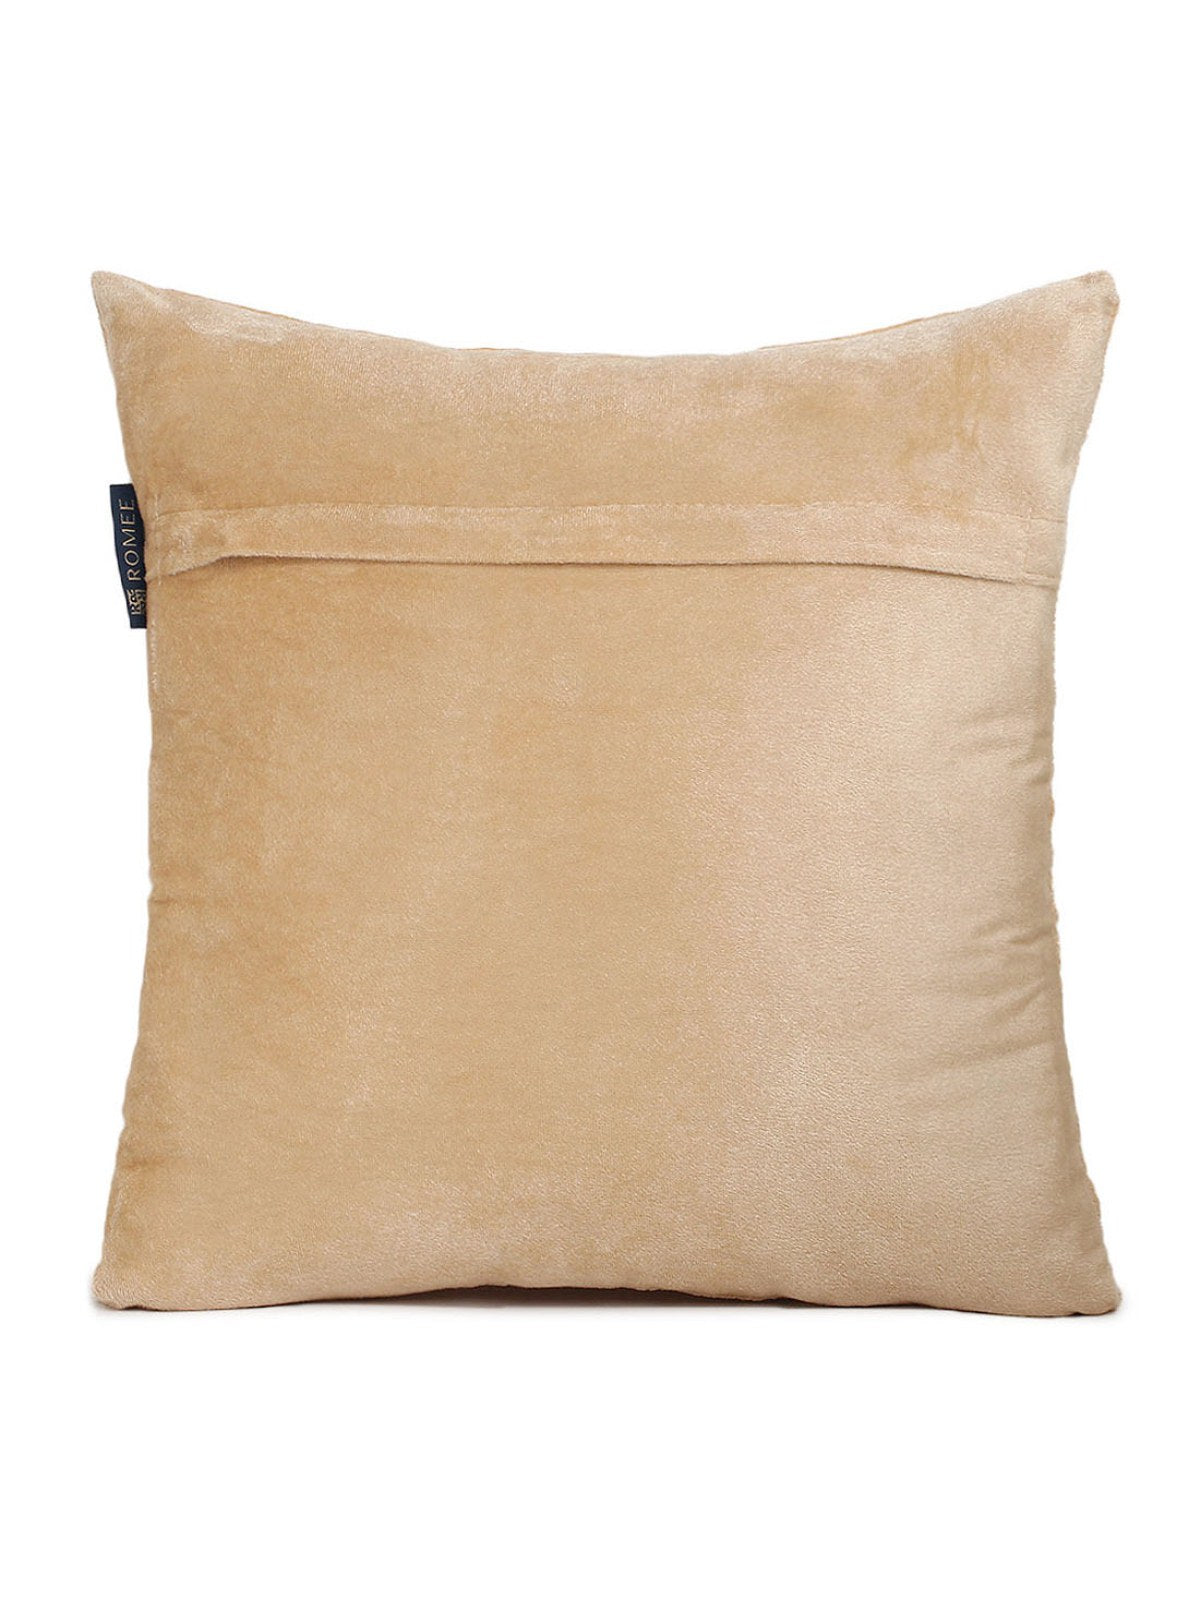 Soft Polyester Velvet Deer Patchwork Designer Cushion Covers 16x16 inches, Set of 5 - Beige